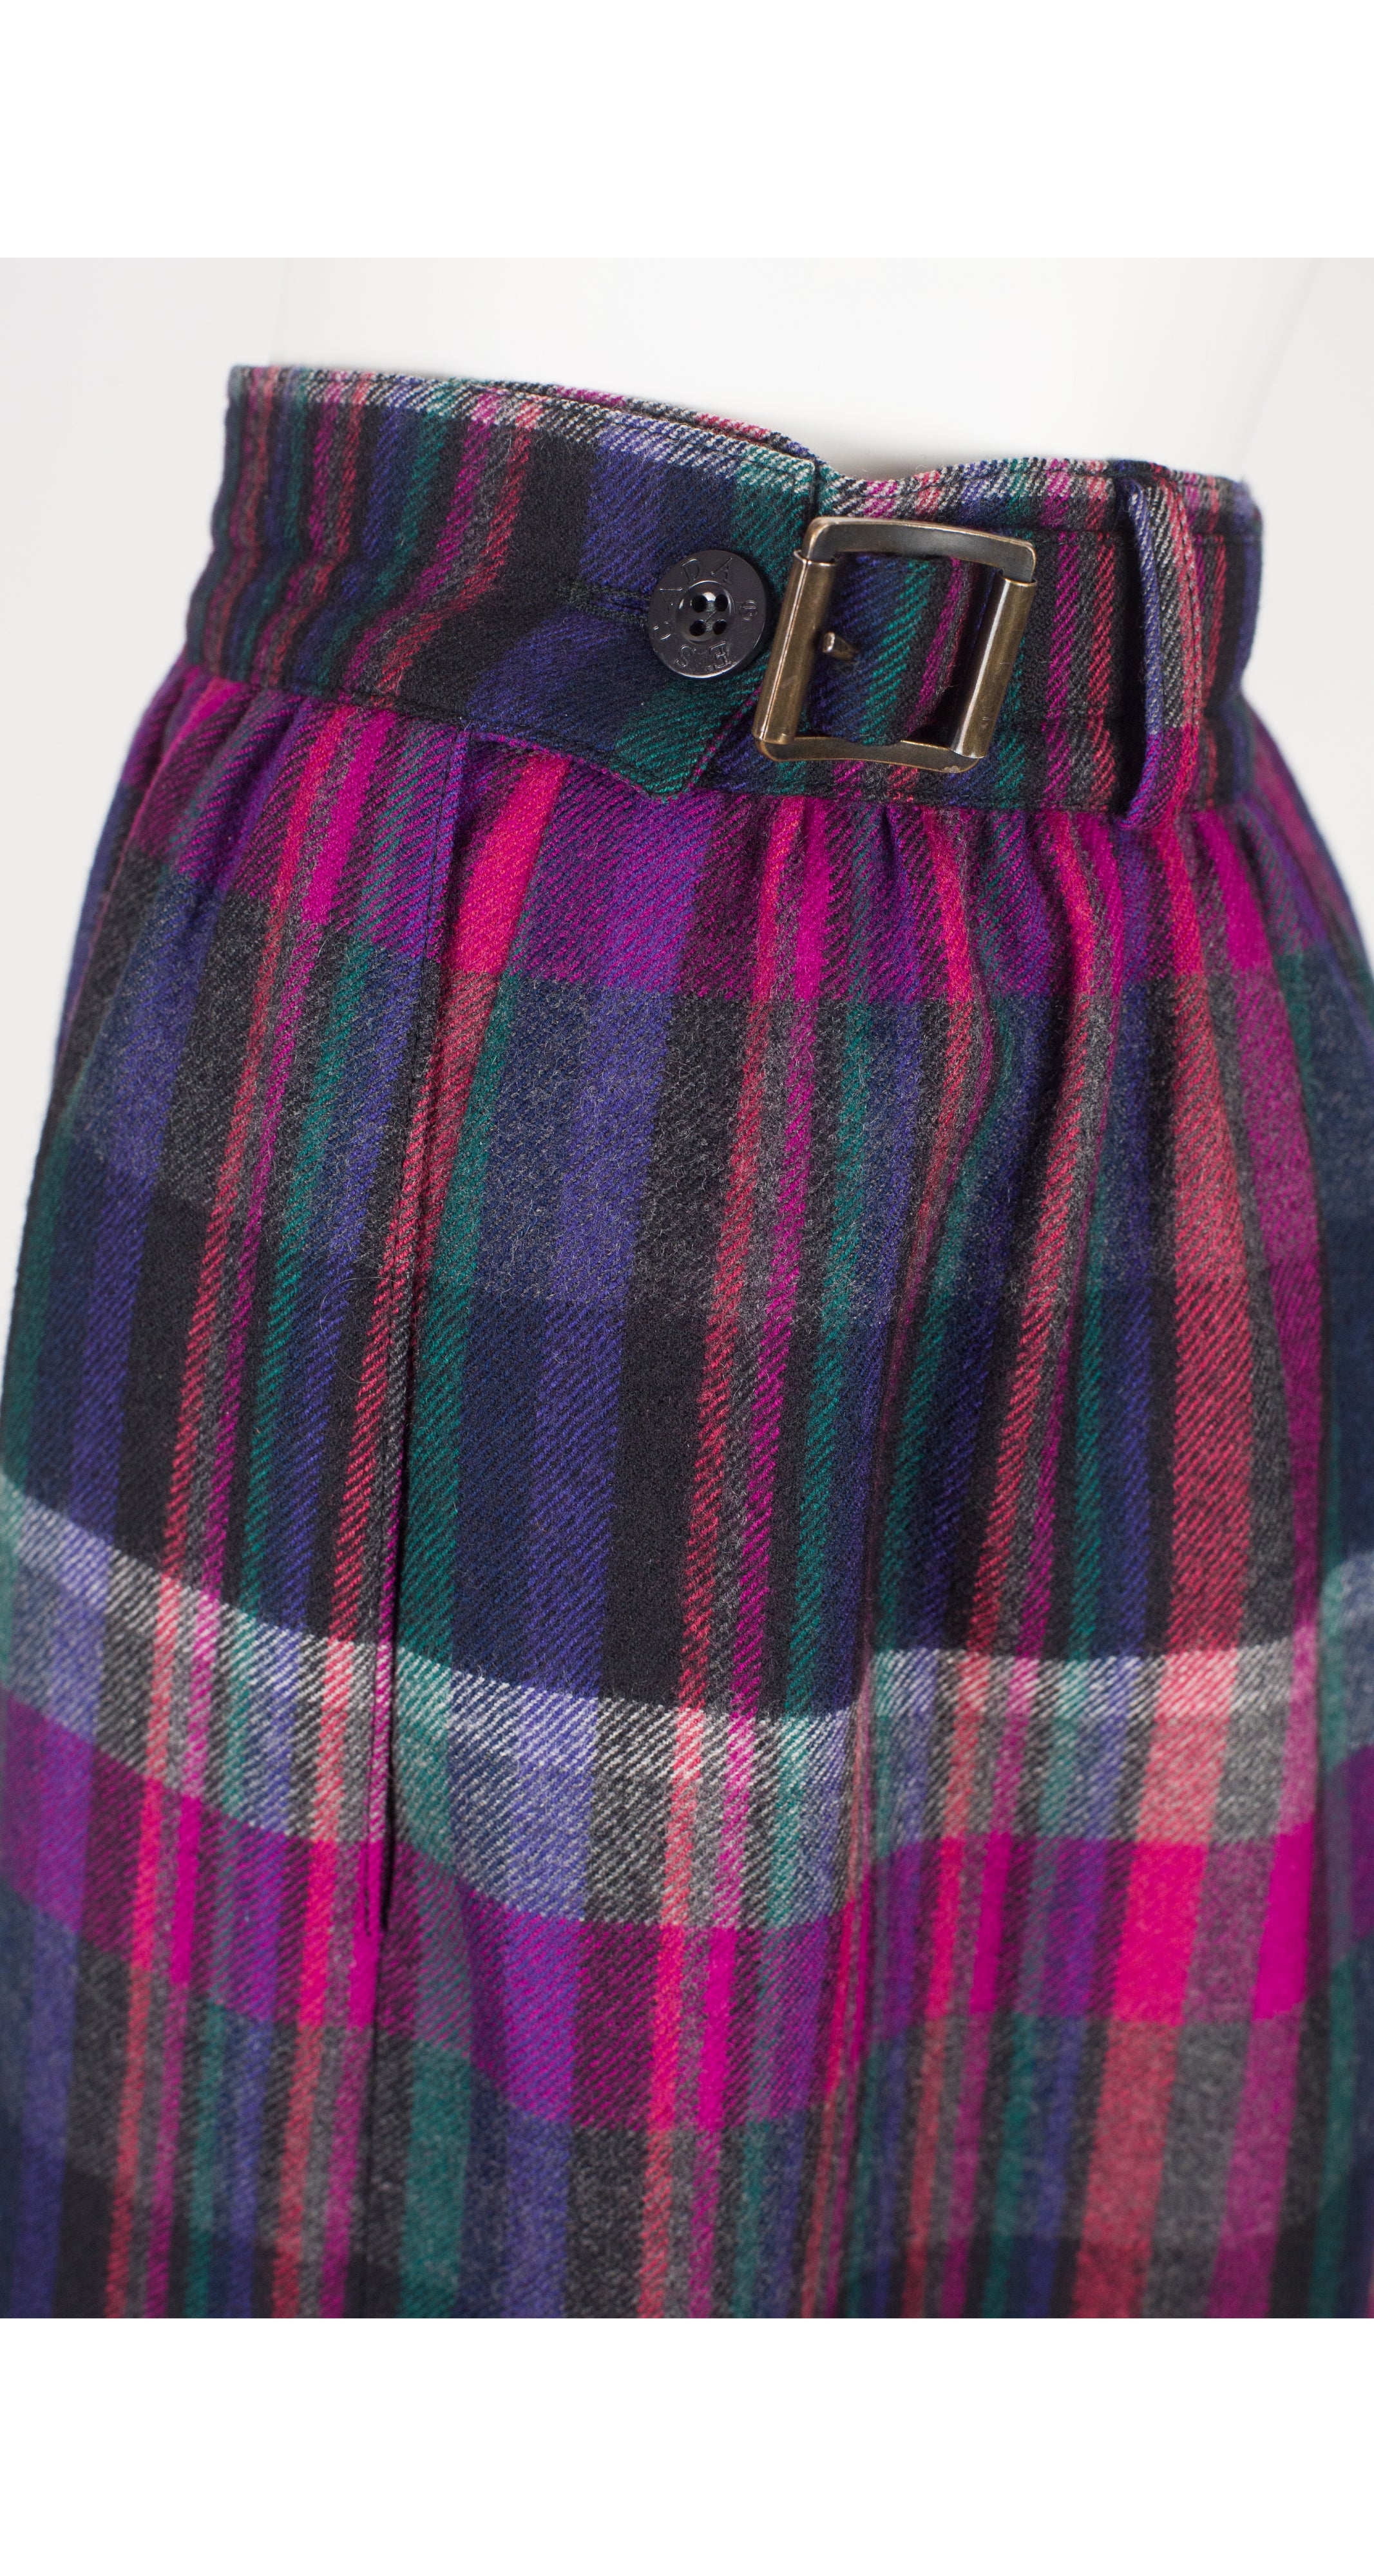 1980s Plaid Wool High-Waisted Buckle Skirt